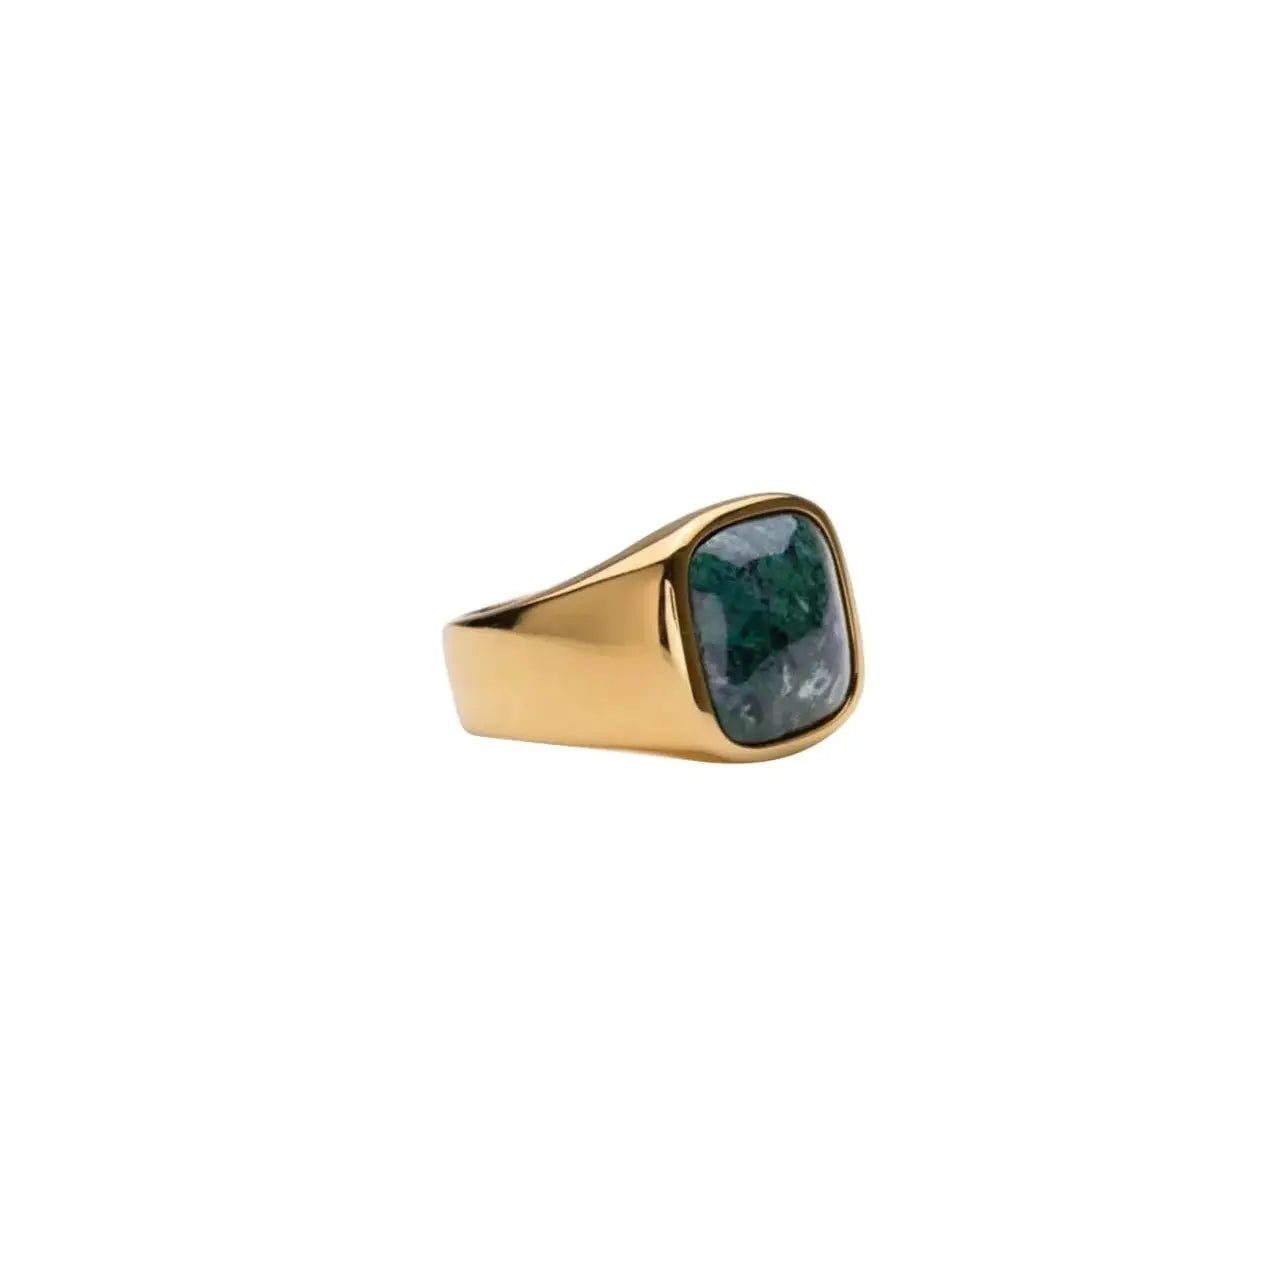 IX Cushion Signet ring - Forgyldt/green marble fra Ix Studios